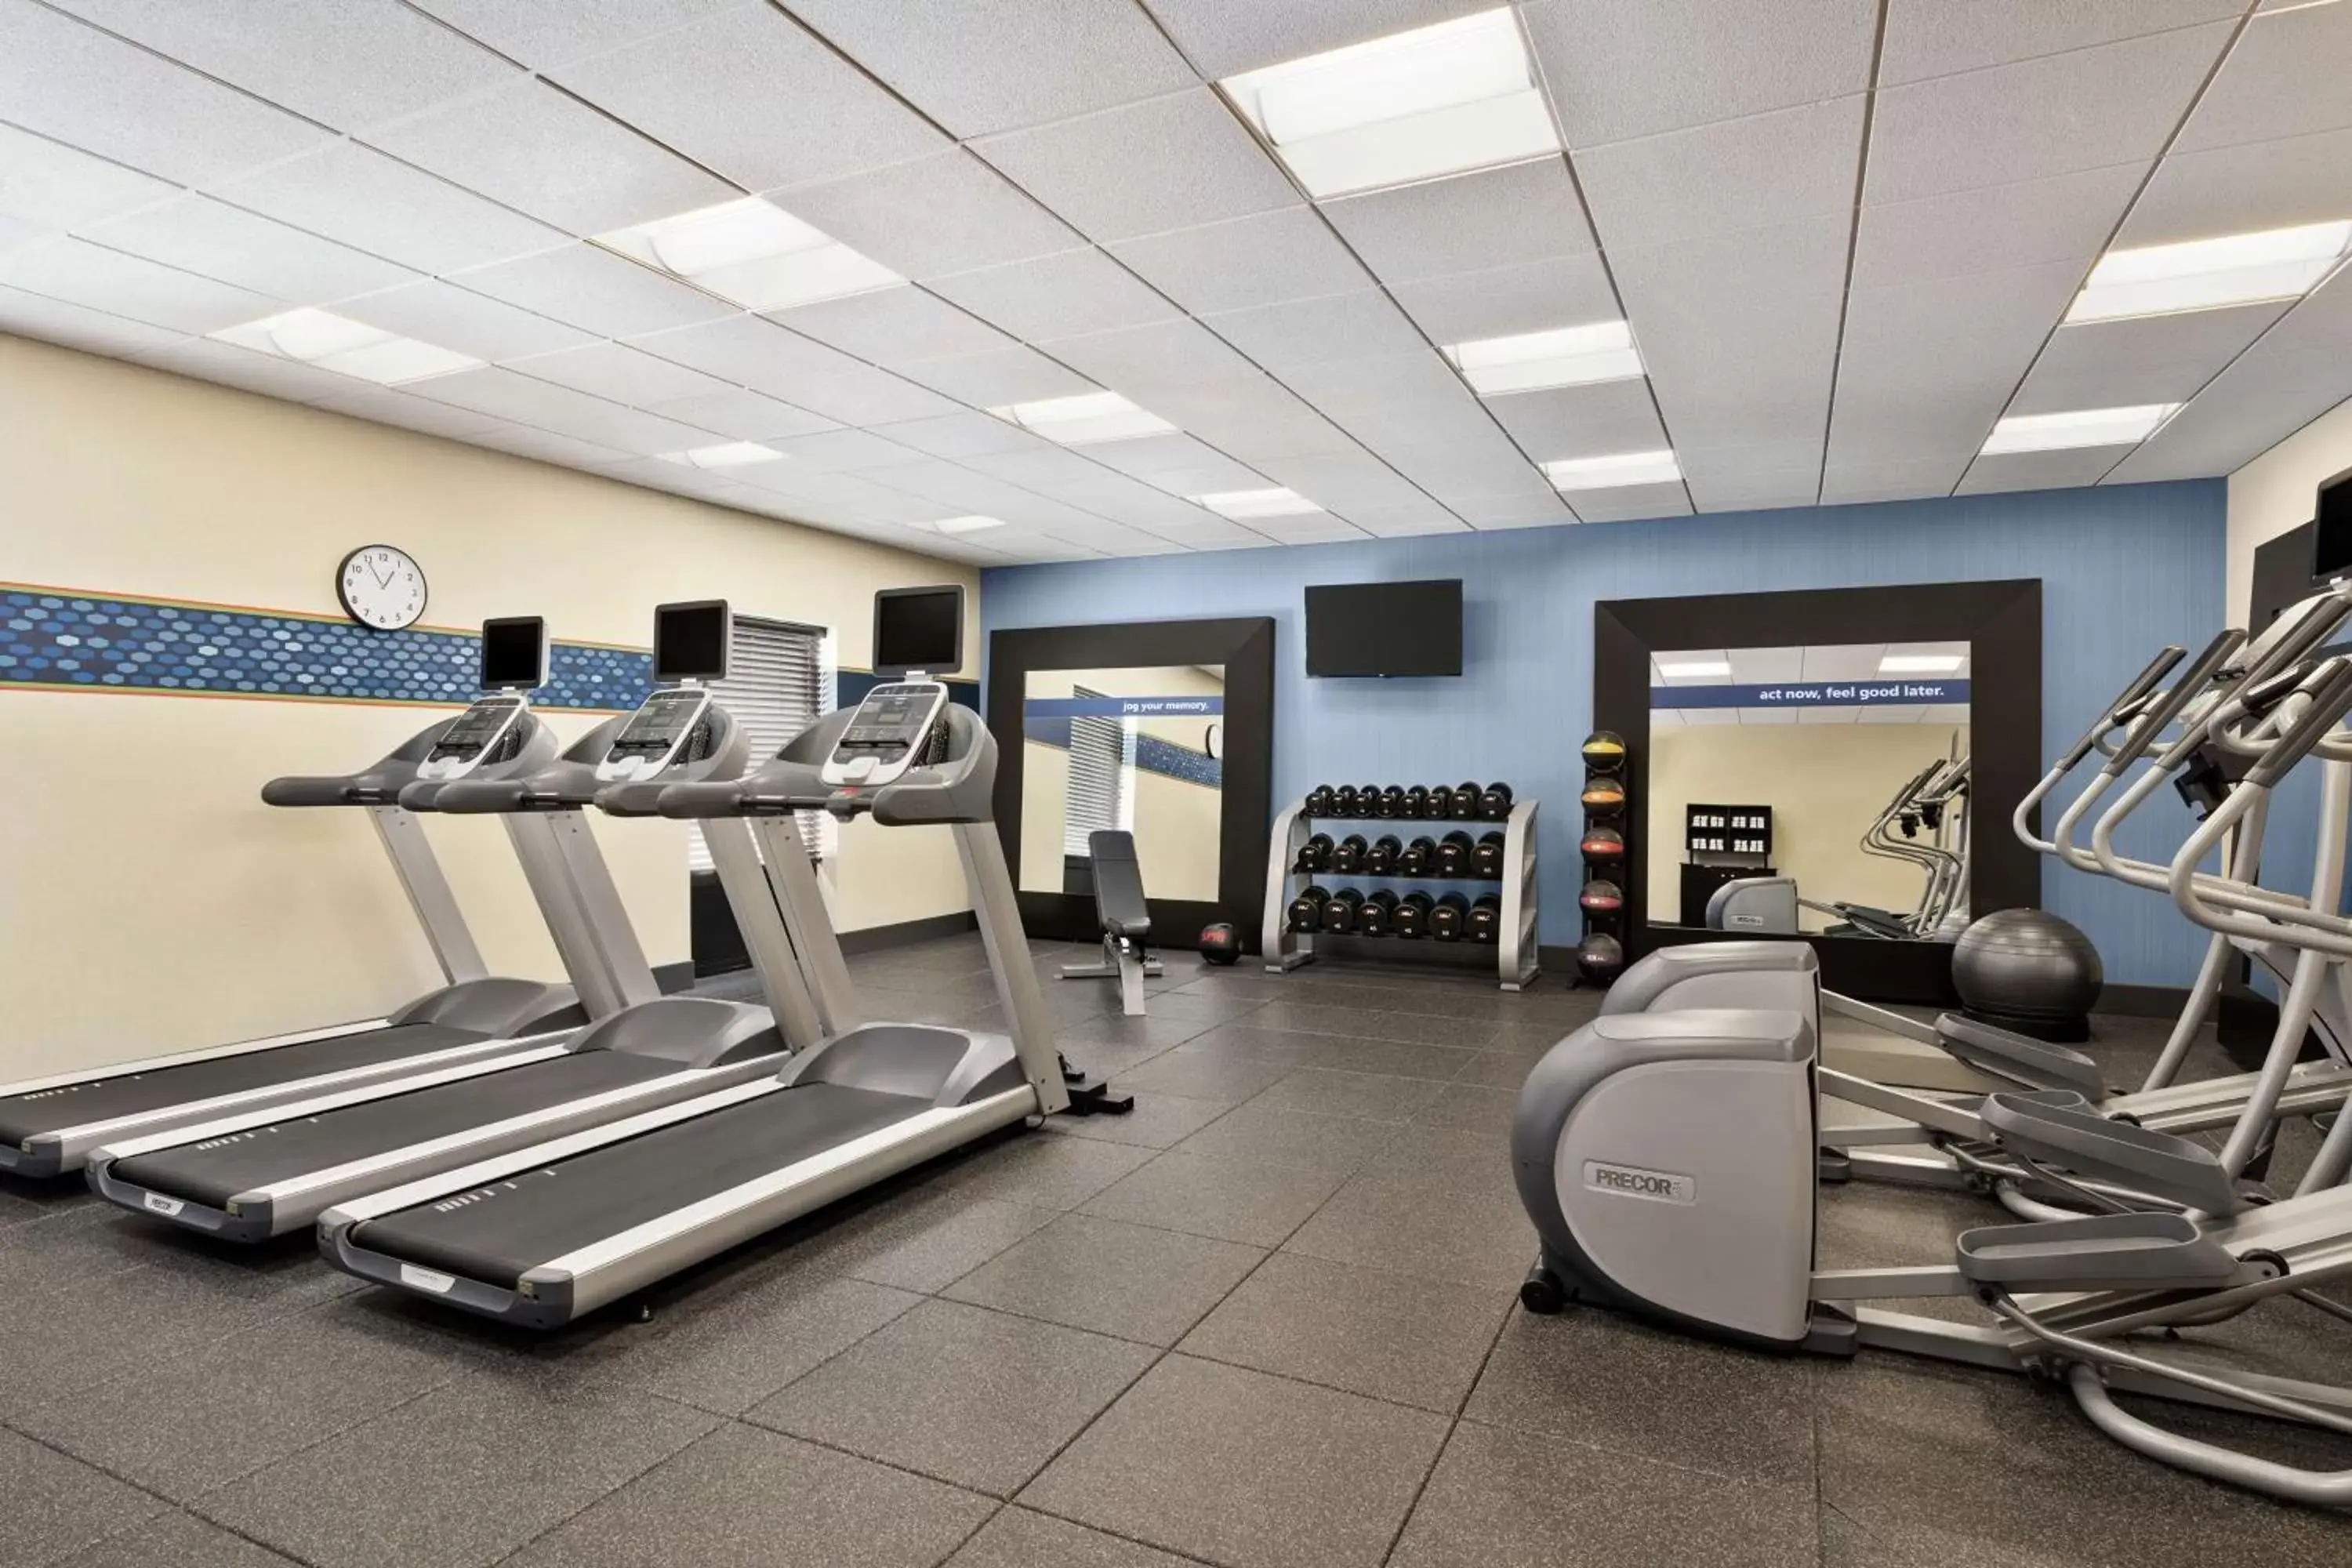 Fitness centre/facilities, Fitness Center/Facilities in Hampton Inn & Suites Mount Joy/Lancaster West, Pa